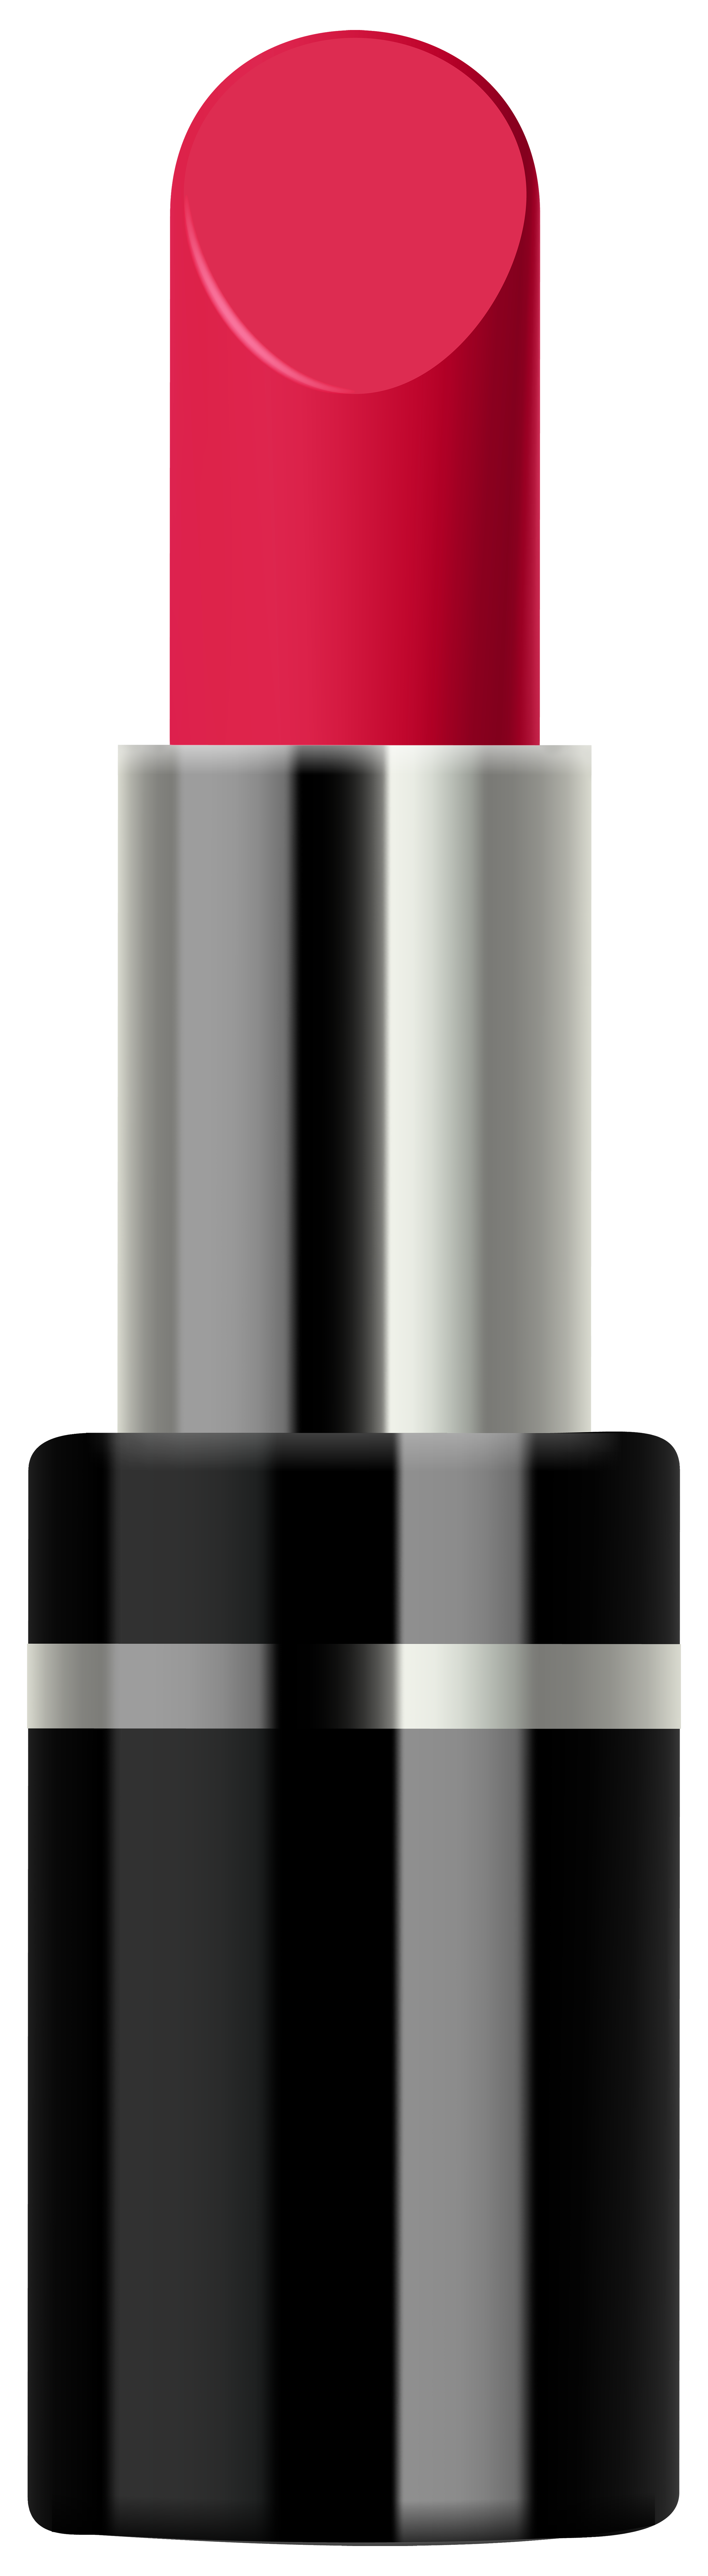 Lipstick Cosmetics Clip art - Red Lipstick PNG Transparent Clip Art